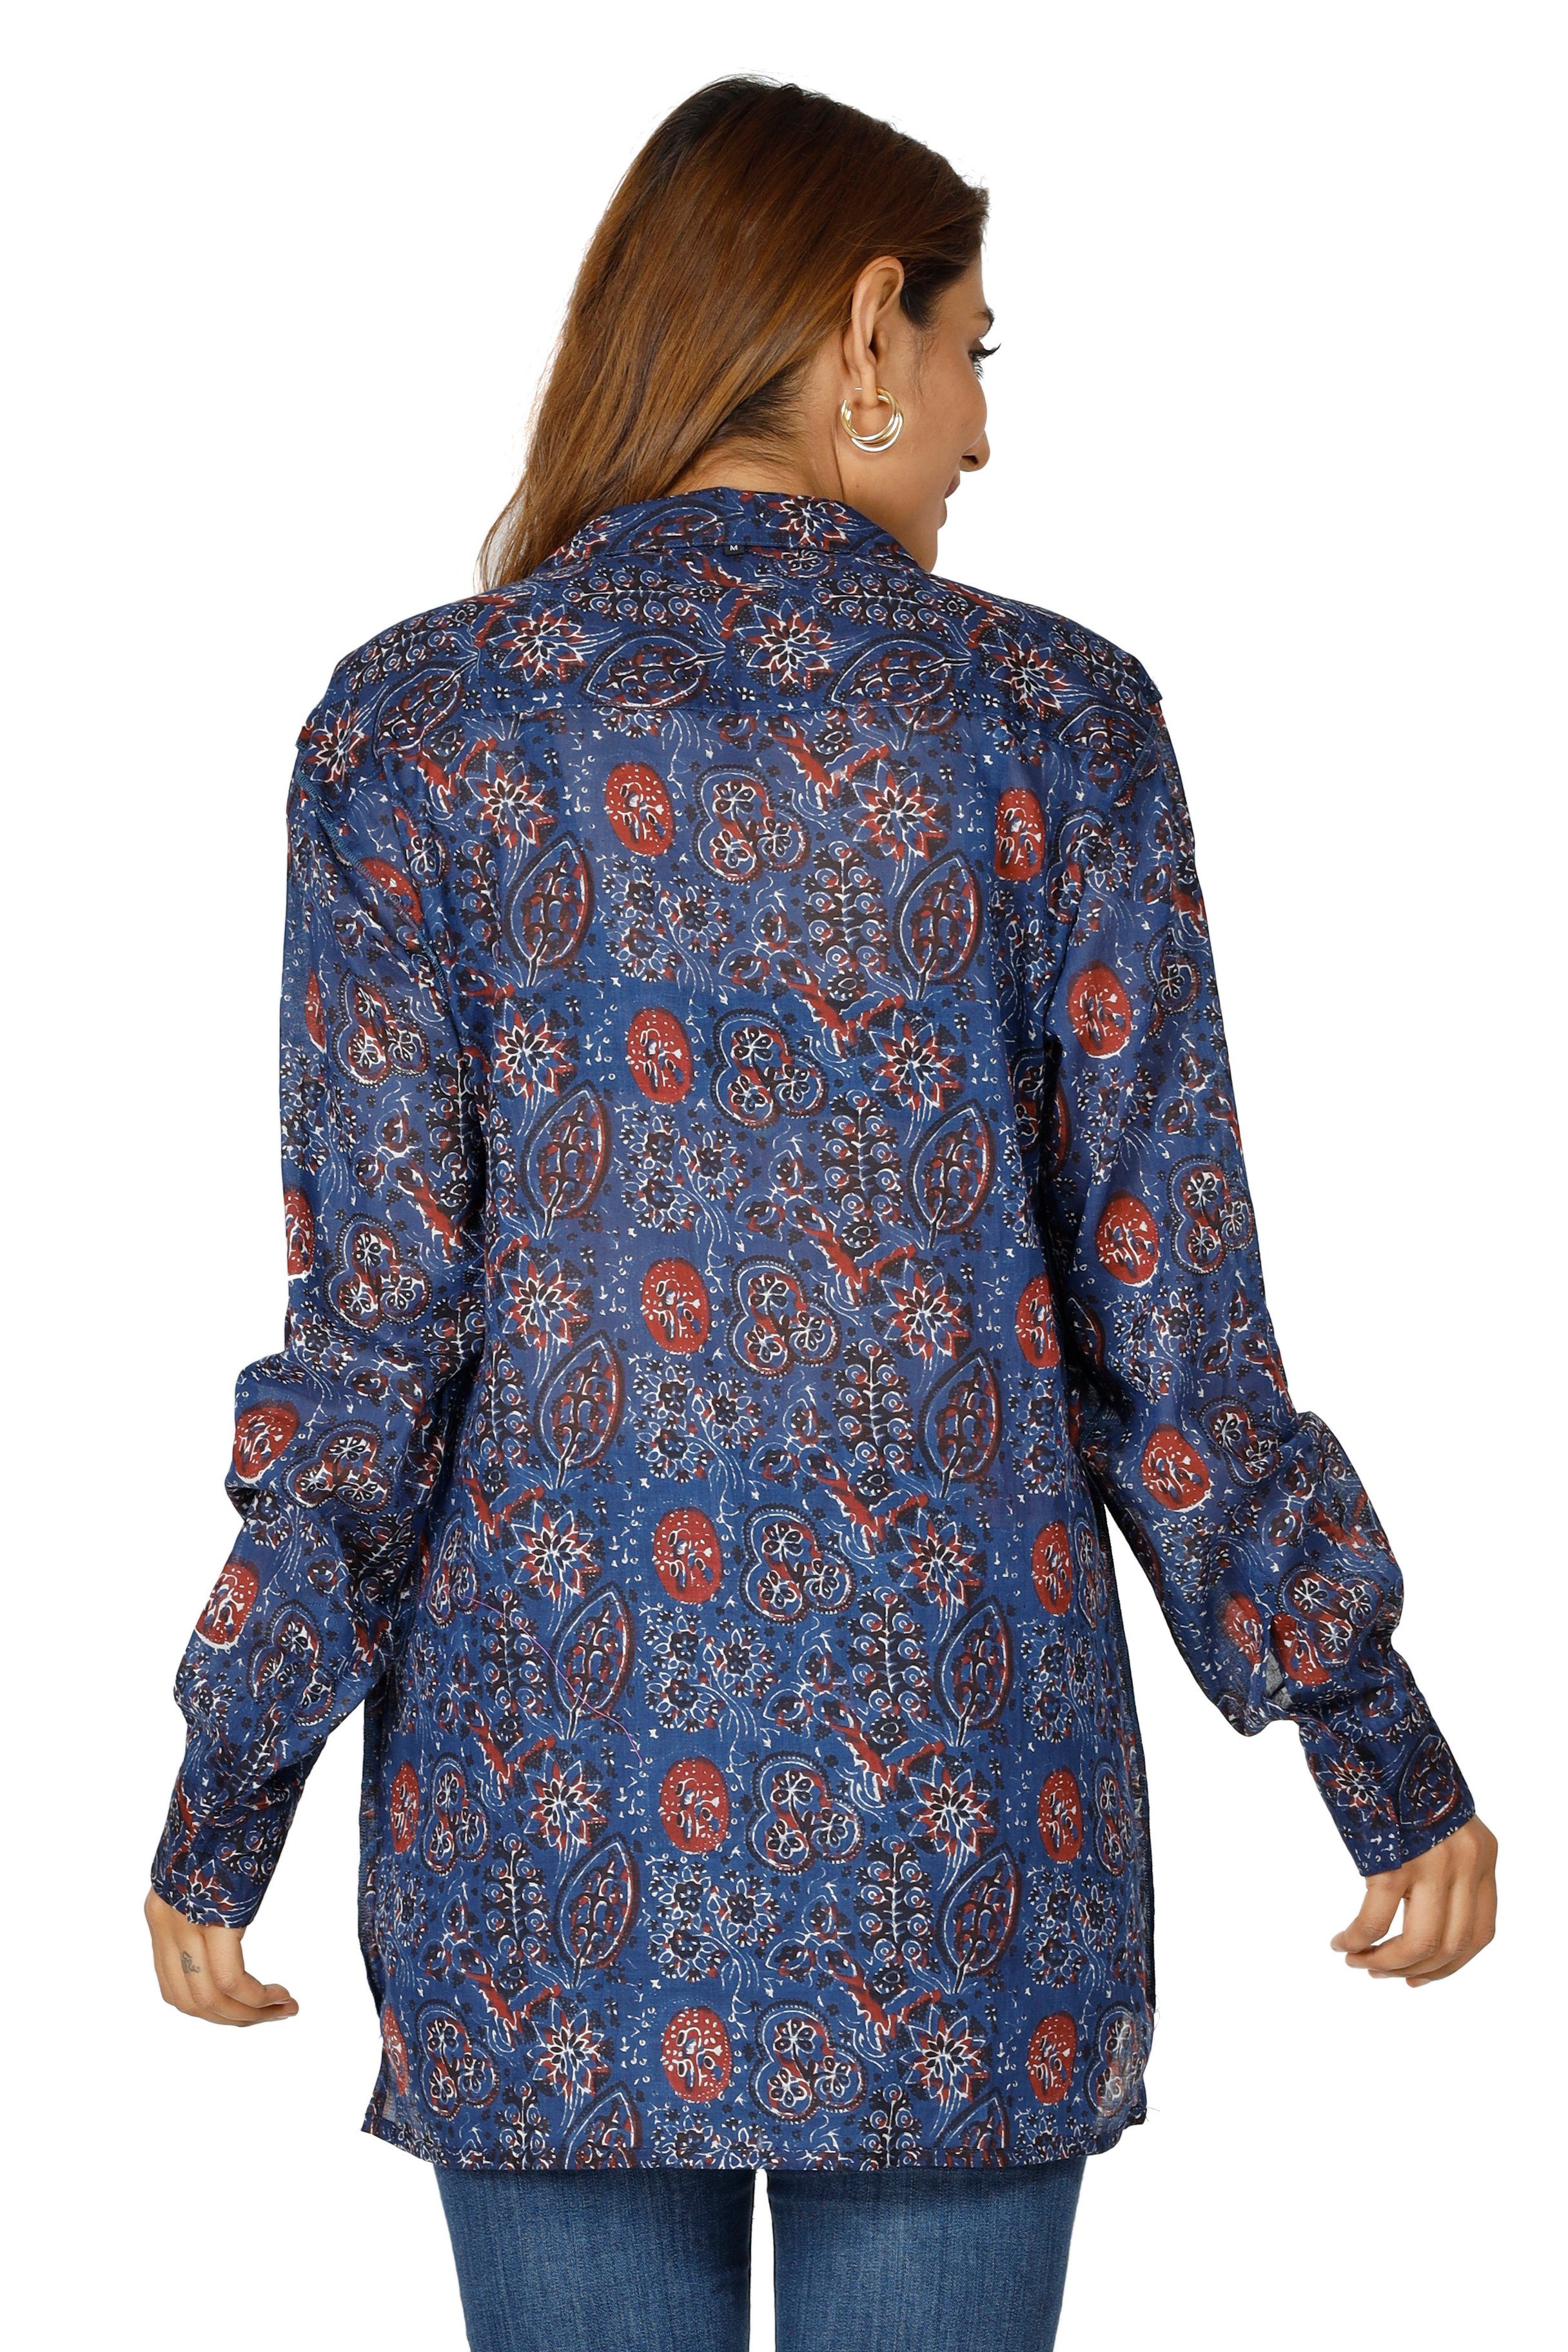 Guru-Shop Longbluse Handbedrucktes Boho Langarmhemd, Bekleidung luftiges.. alternative blau